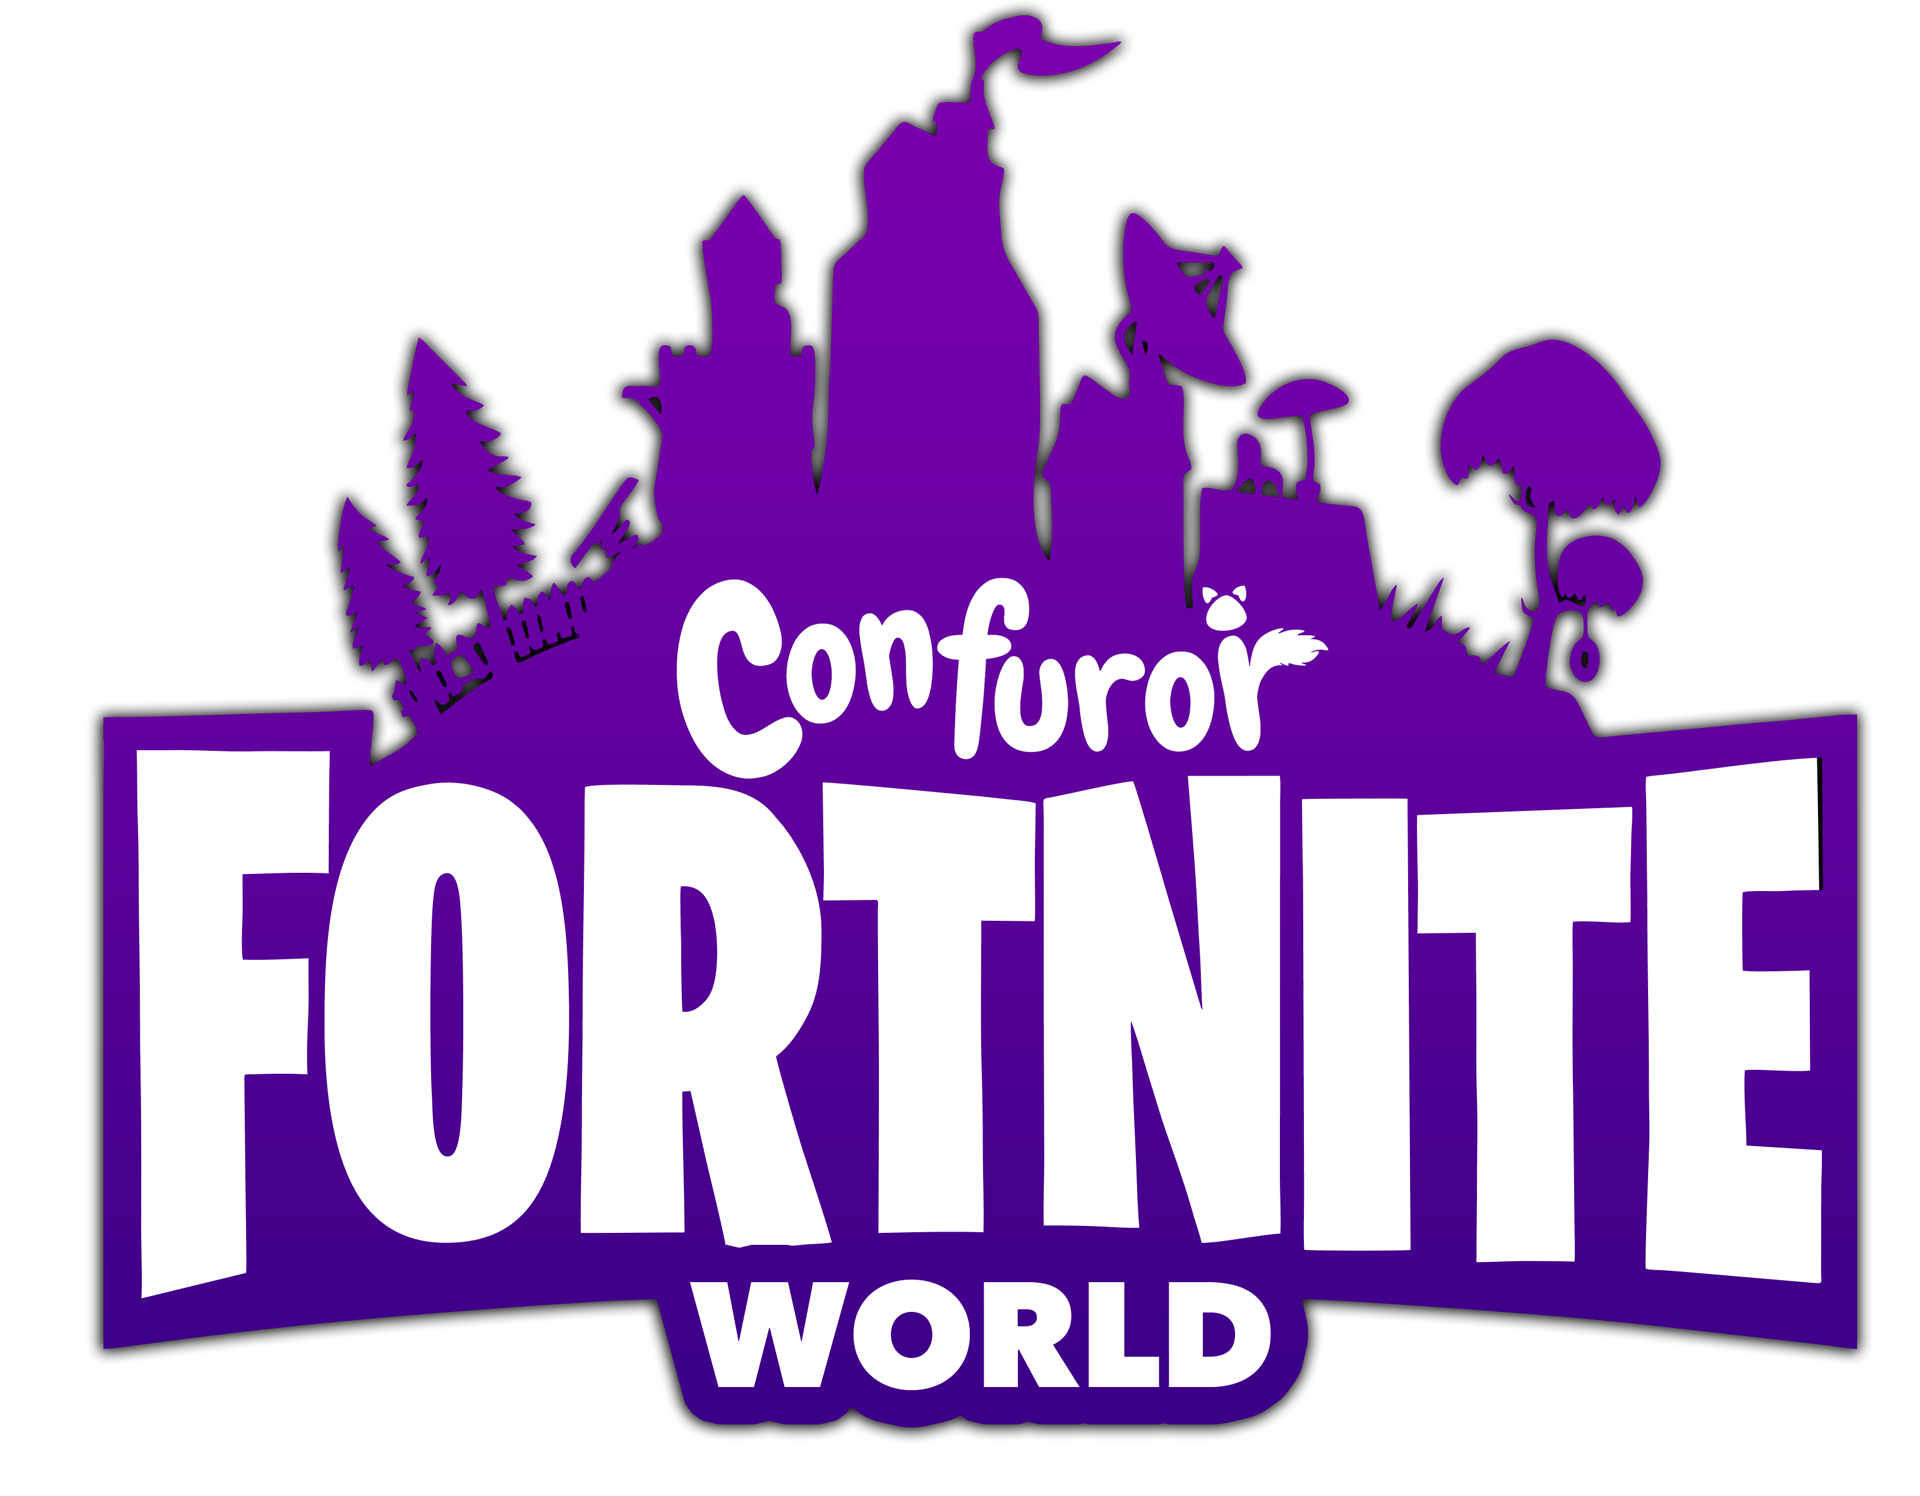 Confuror Fortnite World